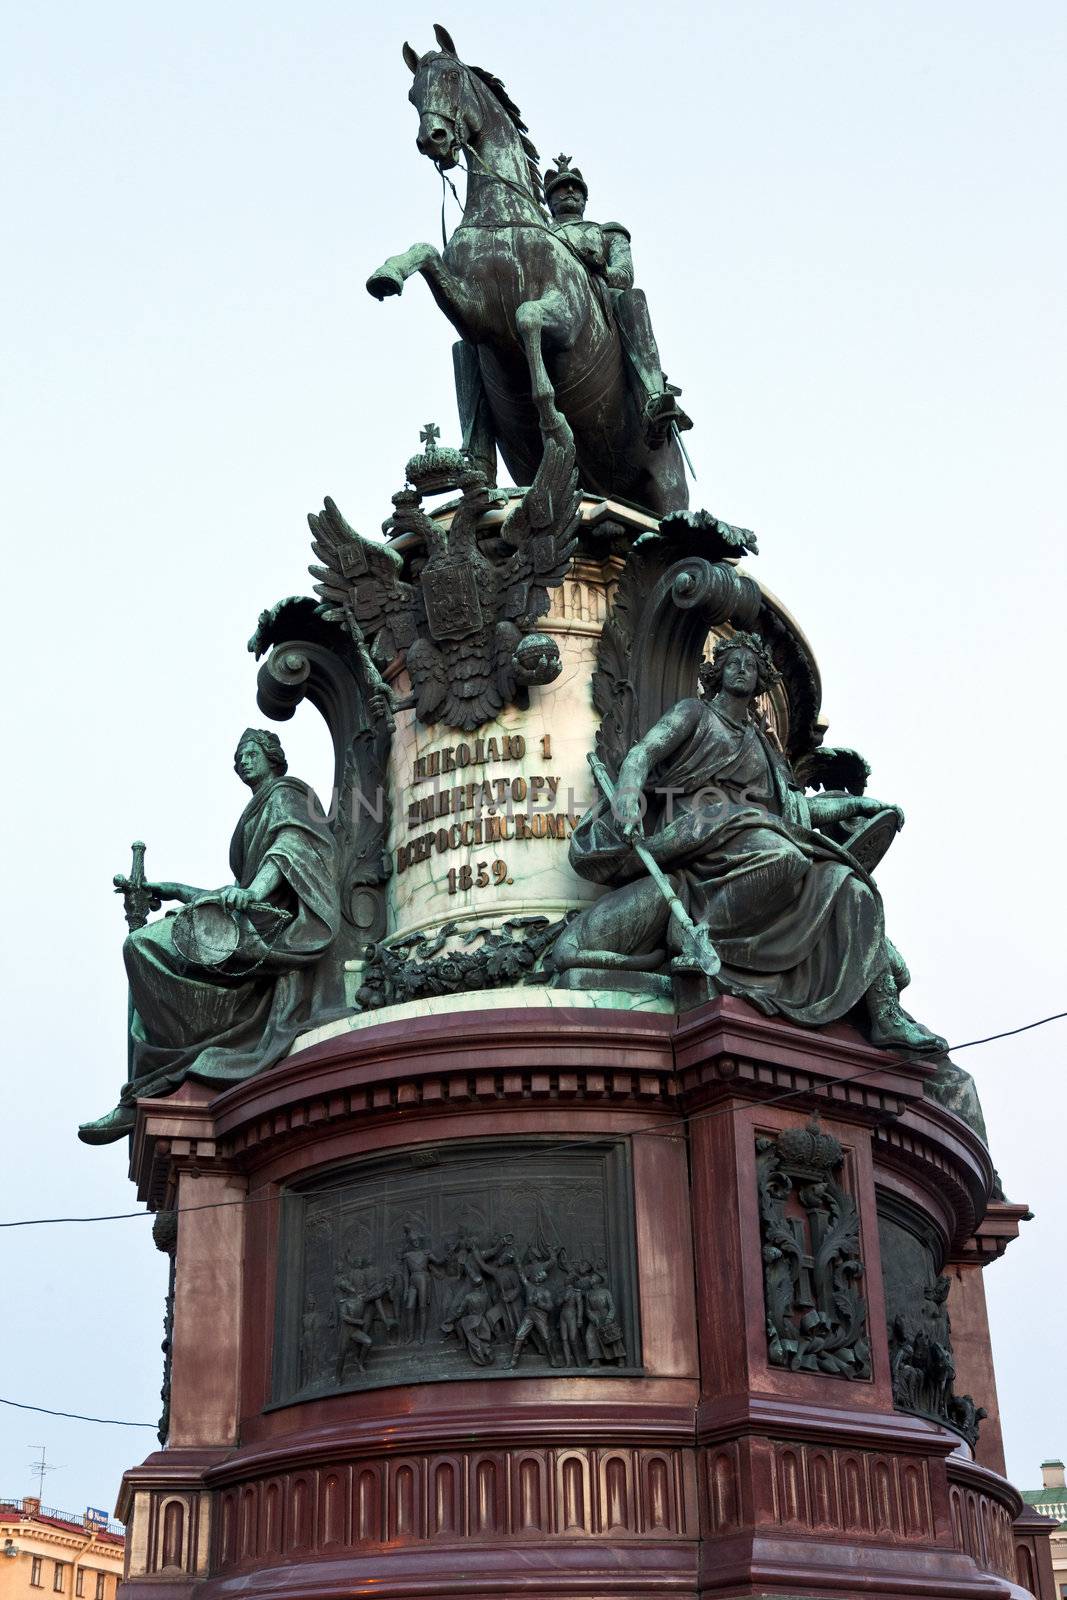 Nicholas I Statue/Monument (St Isaac's Square), St Petersburg by chrisdorney